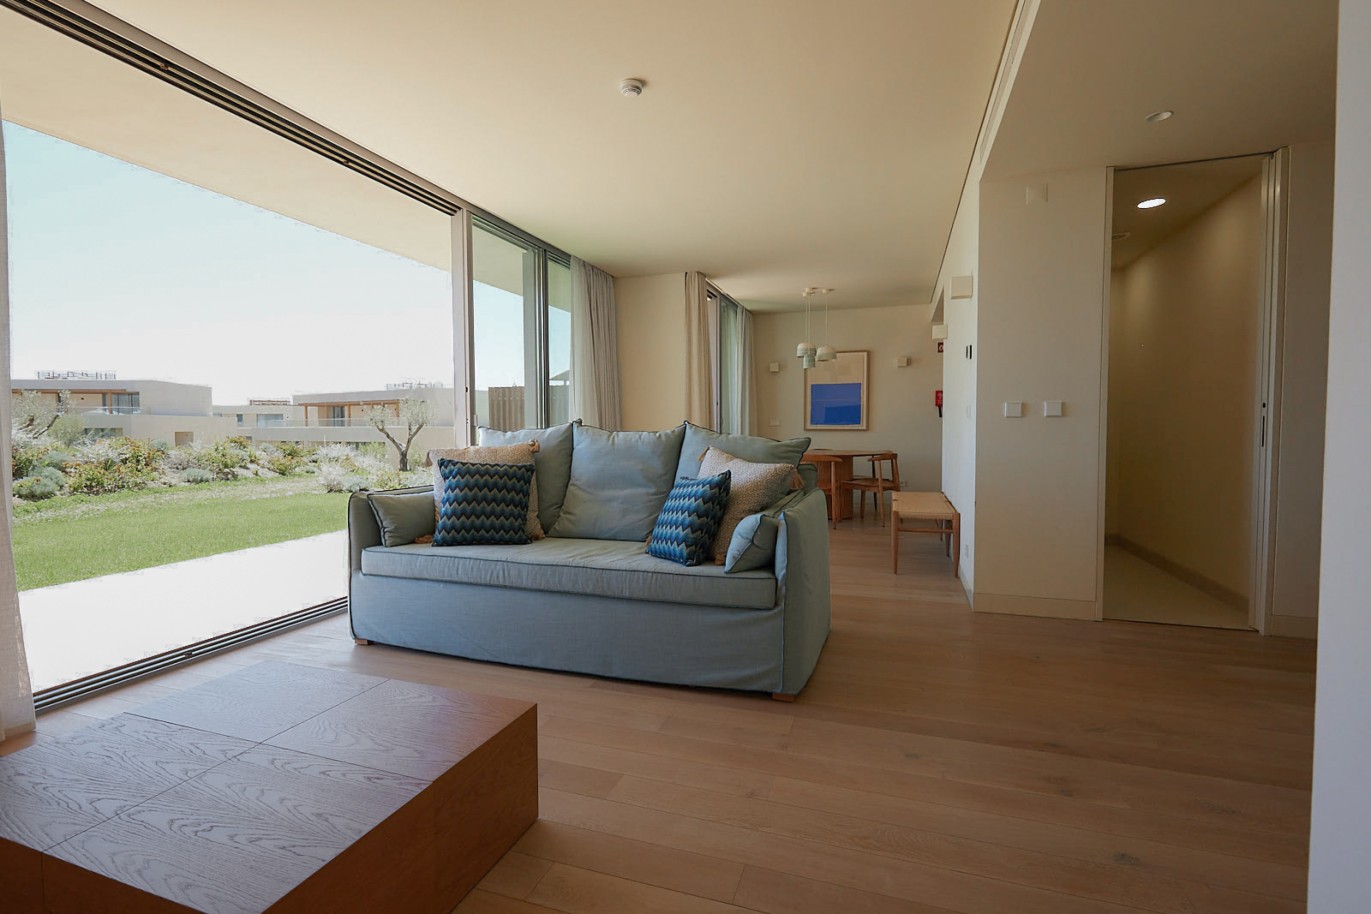 2 bedroom apartment in resort, for sale in Porches, Algarve_228792